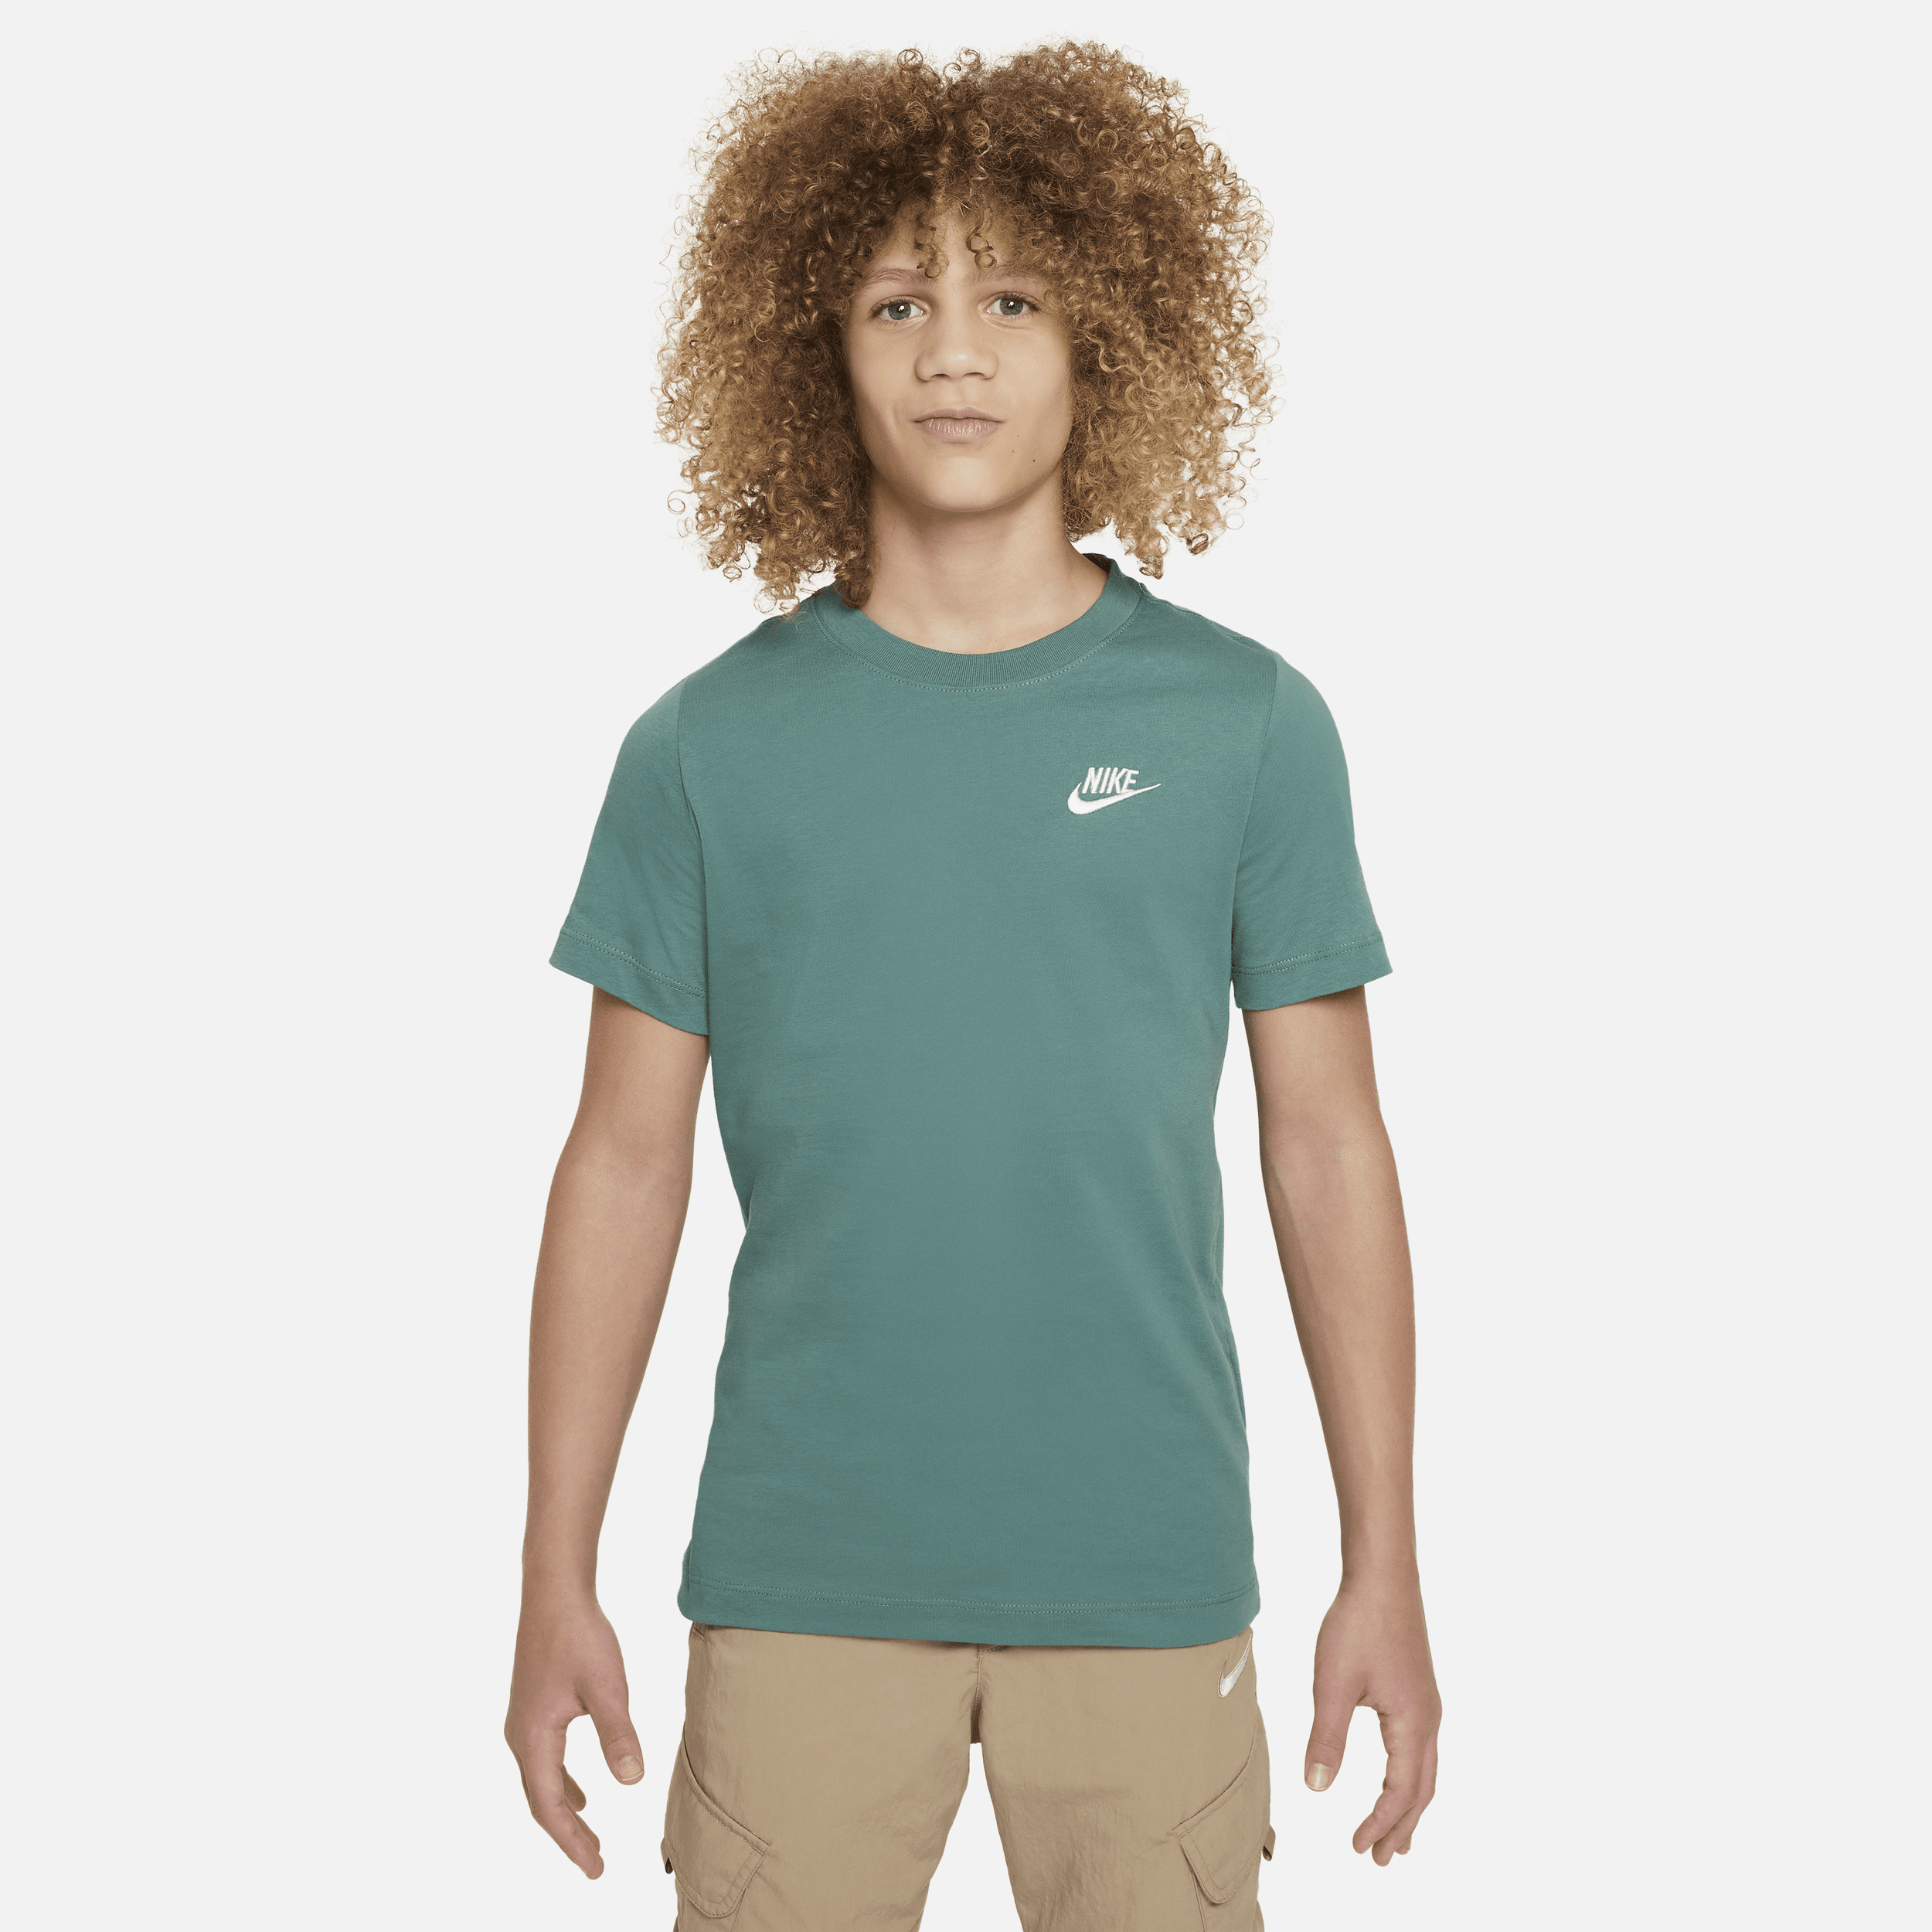 NIKE Sportswear T-Shirt Kinder 361 - bicoastal/white